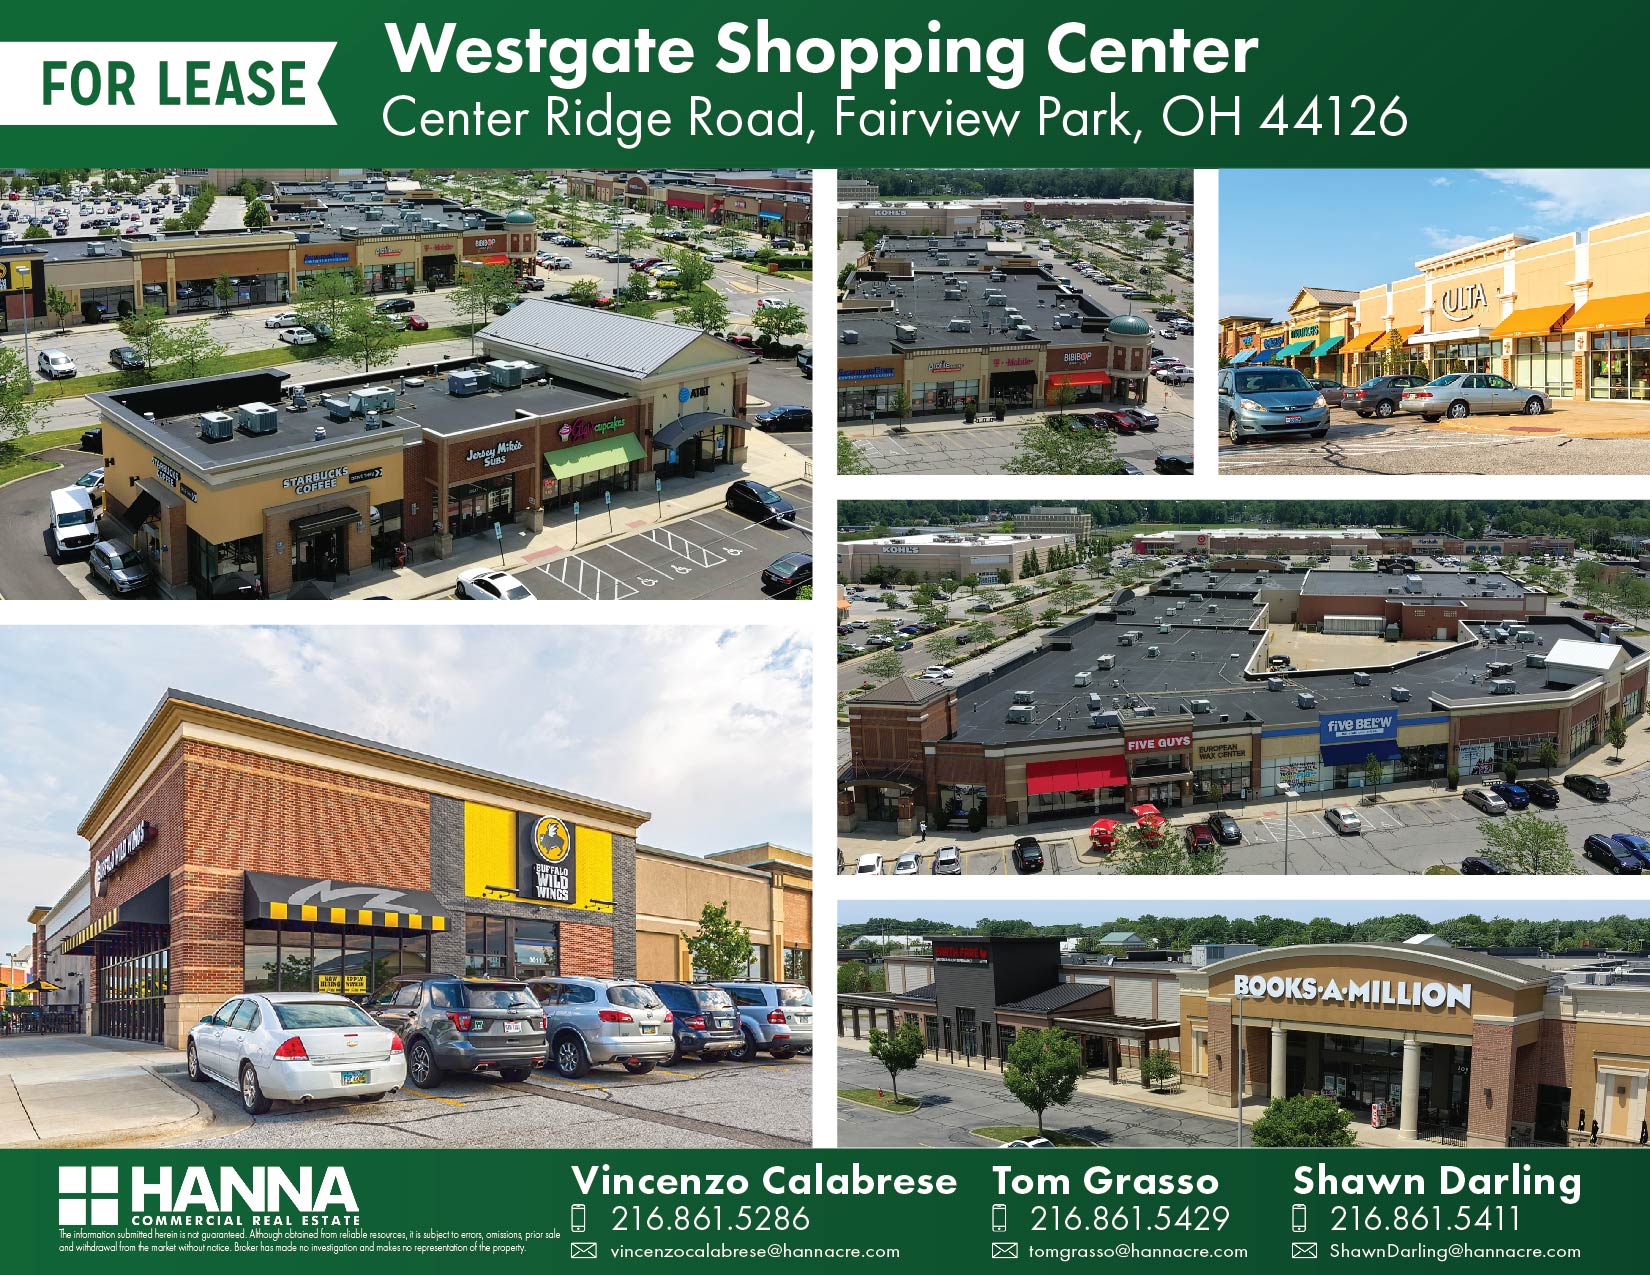 Westgate Shopping Center